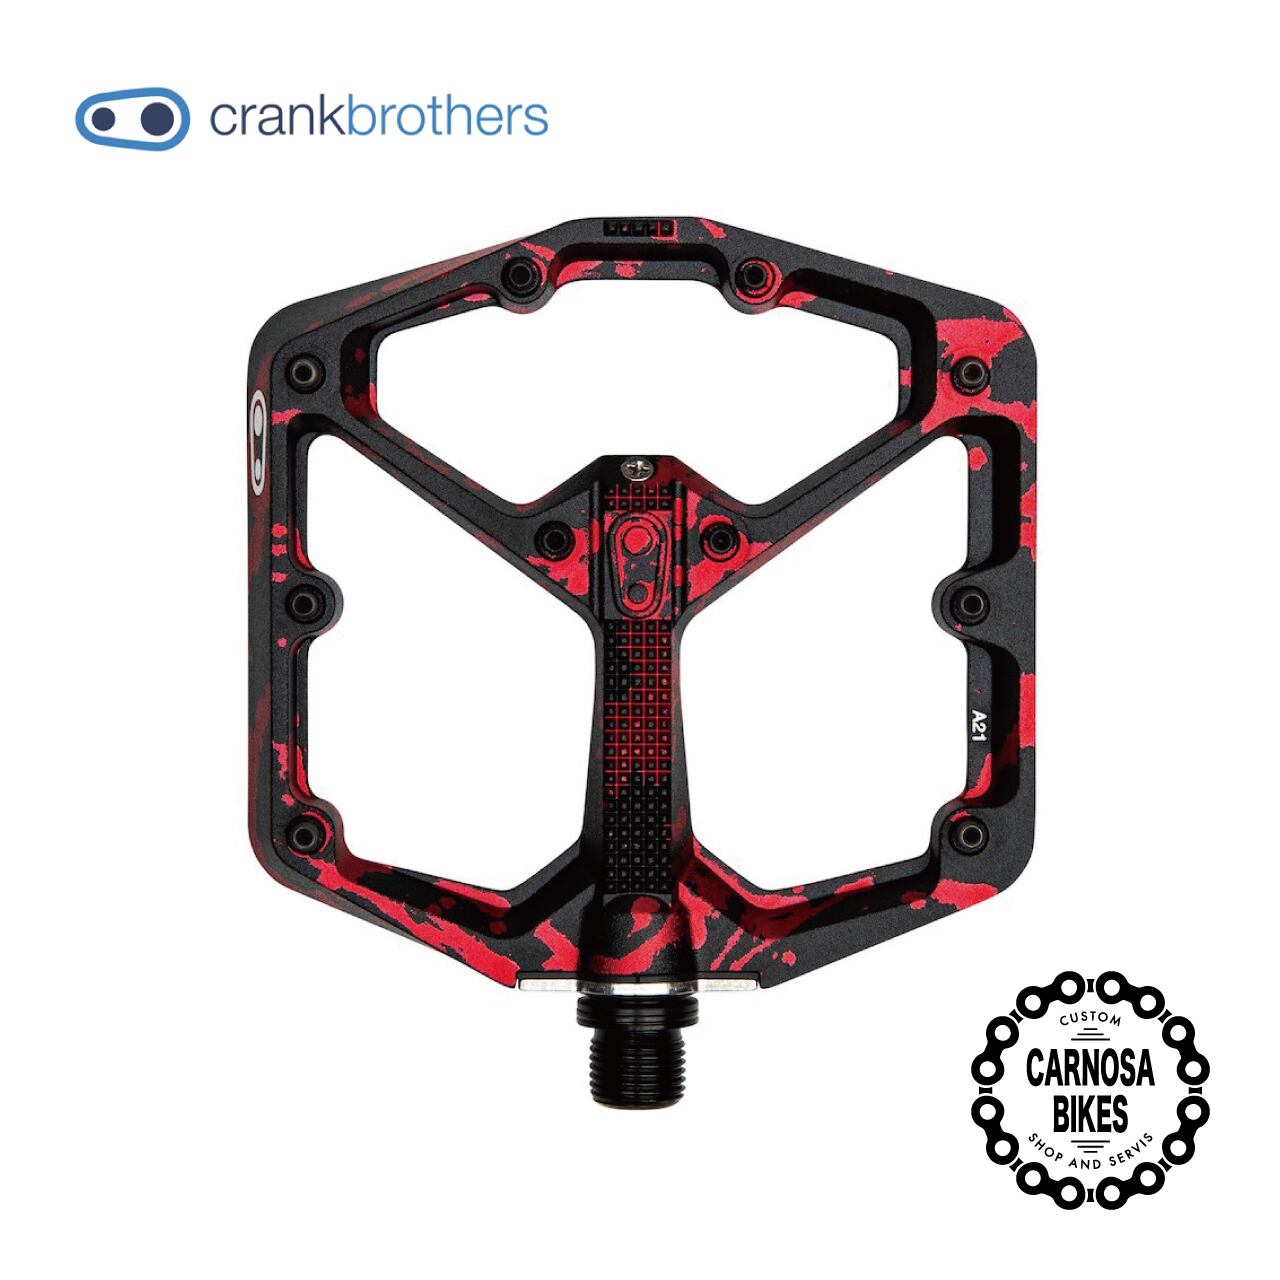 crankbrothers】STAMP LARGE Splatter Paint Red 限定カラー | 【CARNOSA BIKES】マウンテンバイク&BMX 自転車ショップ